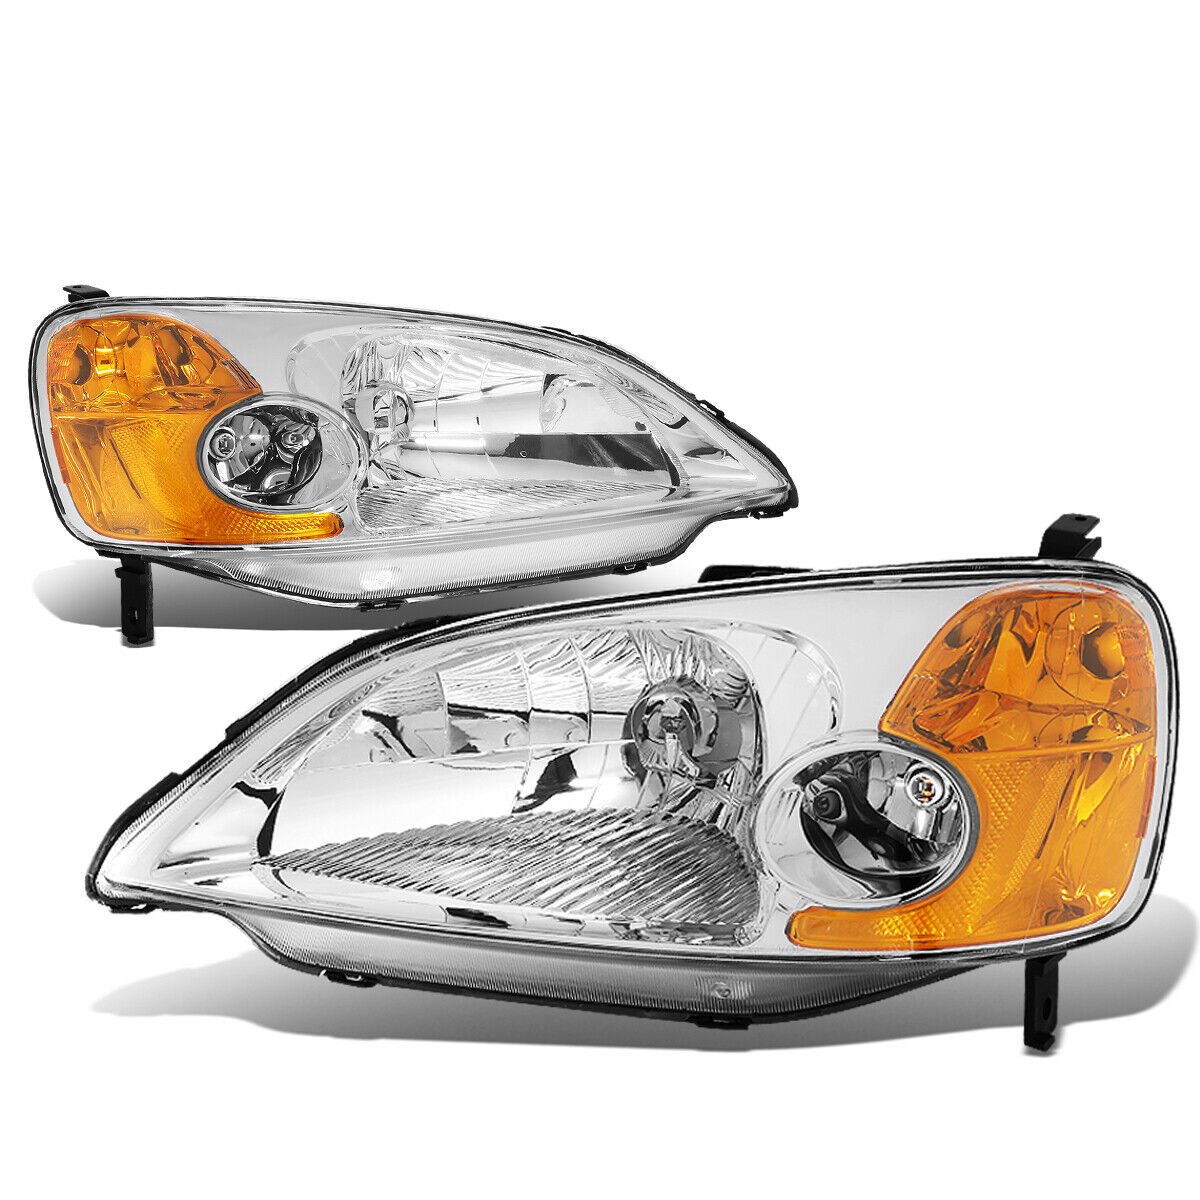 For 2001-2003 Honda Civic DX EX GX HX LX Chrome/Amber Corner Headlight Headlamps